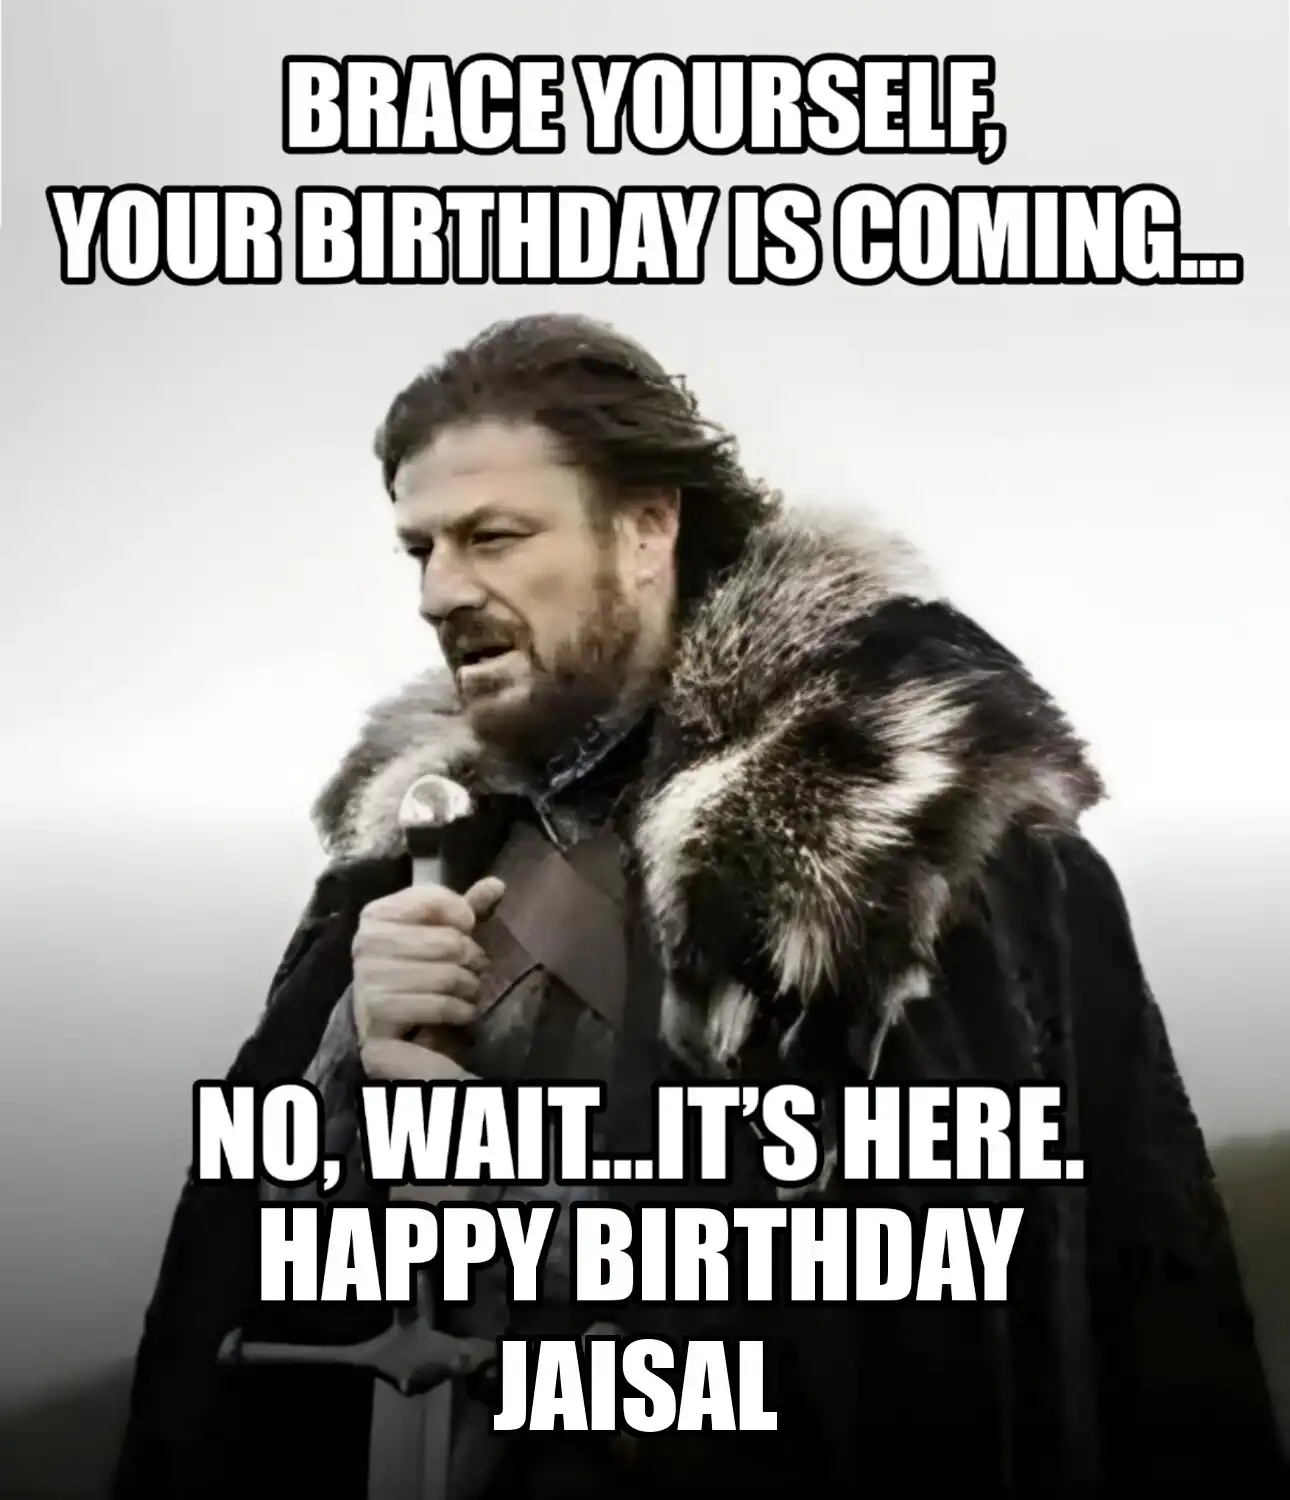 Happy Birthday Jaisal Brace Yourself Your Birthday Is Coming Meme